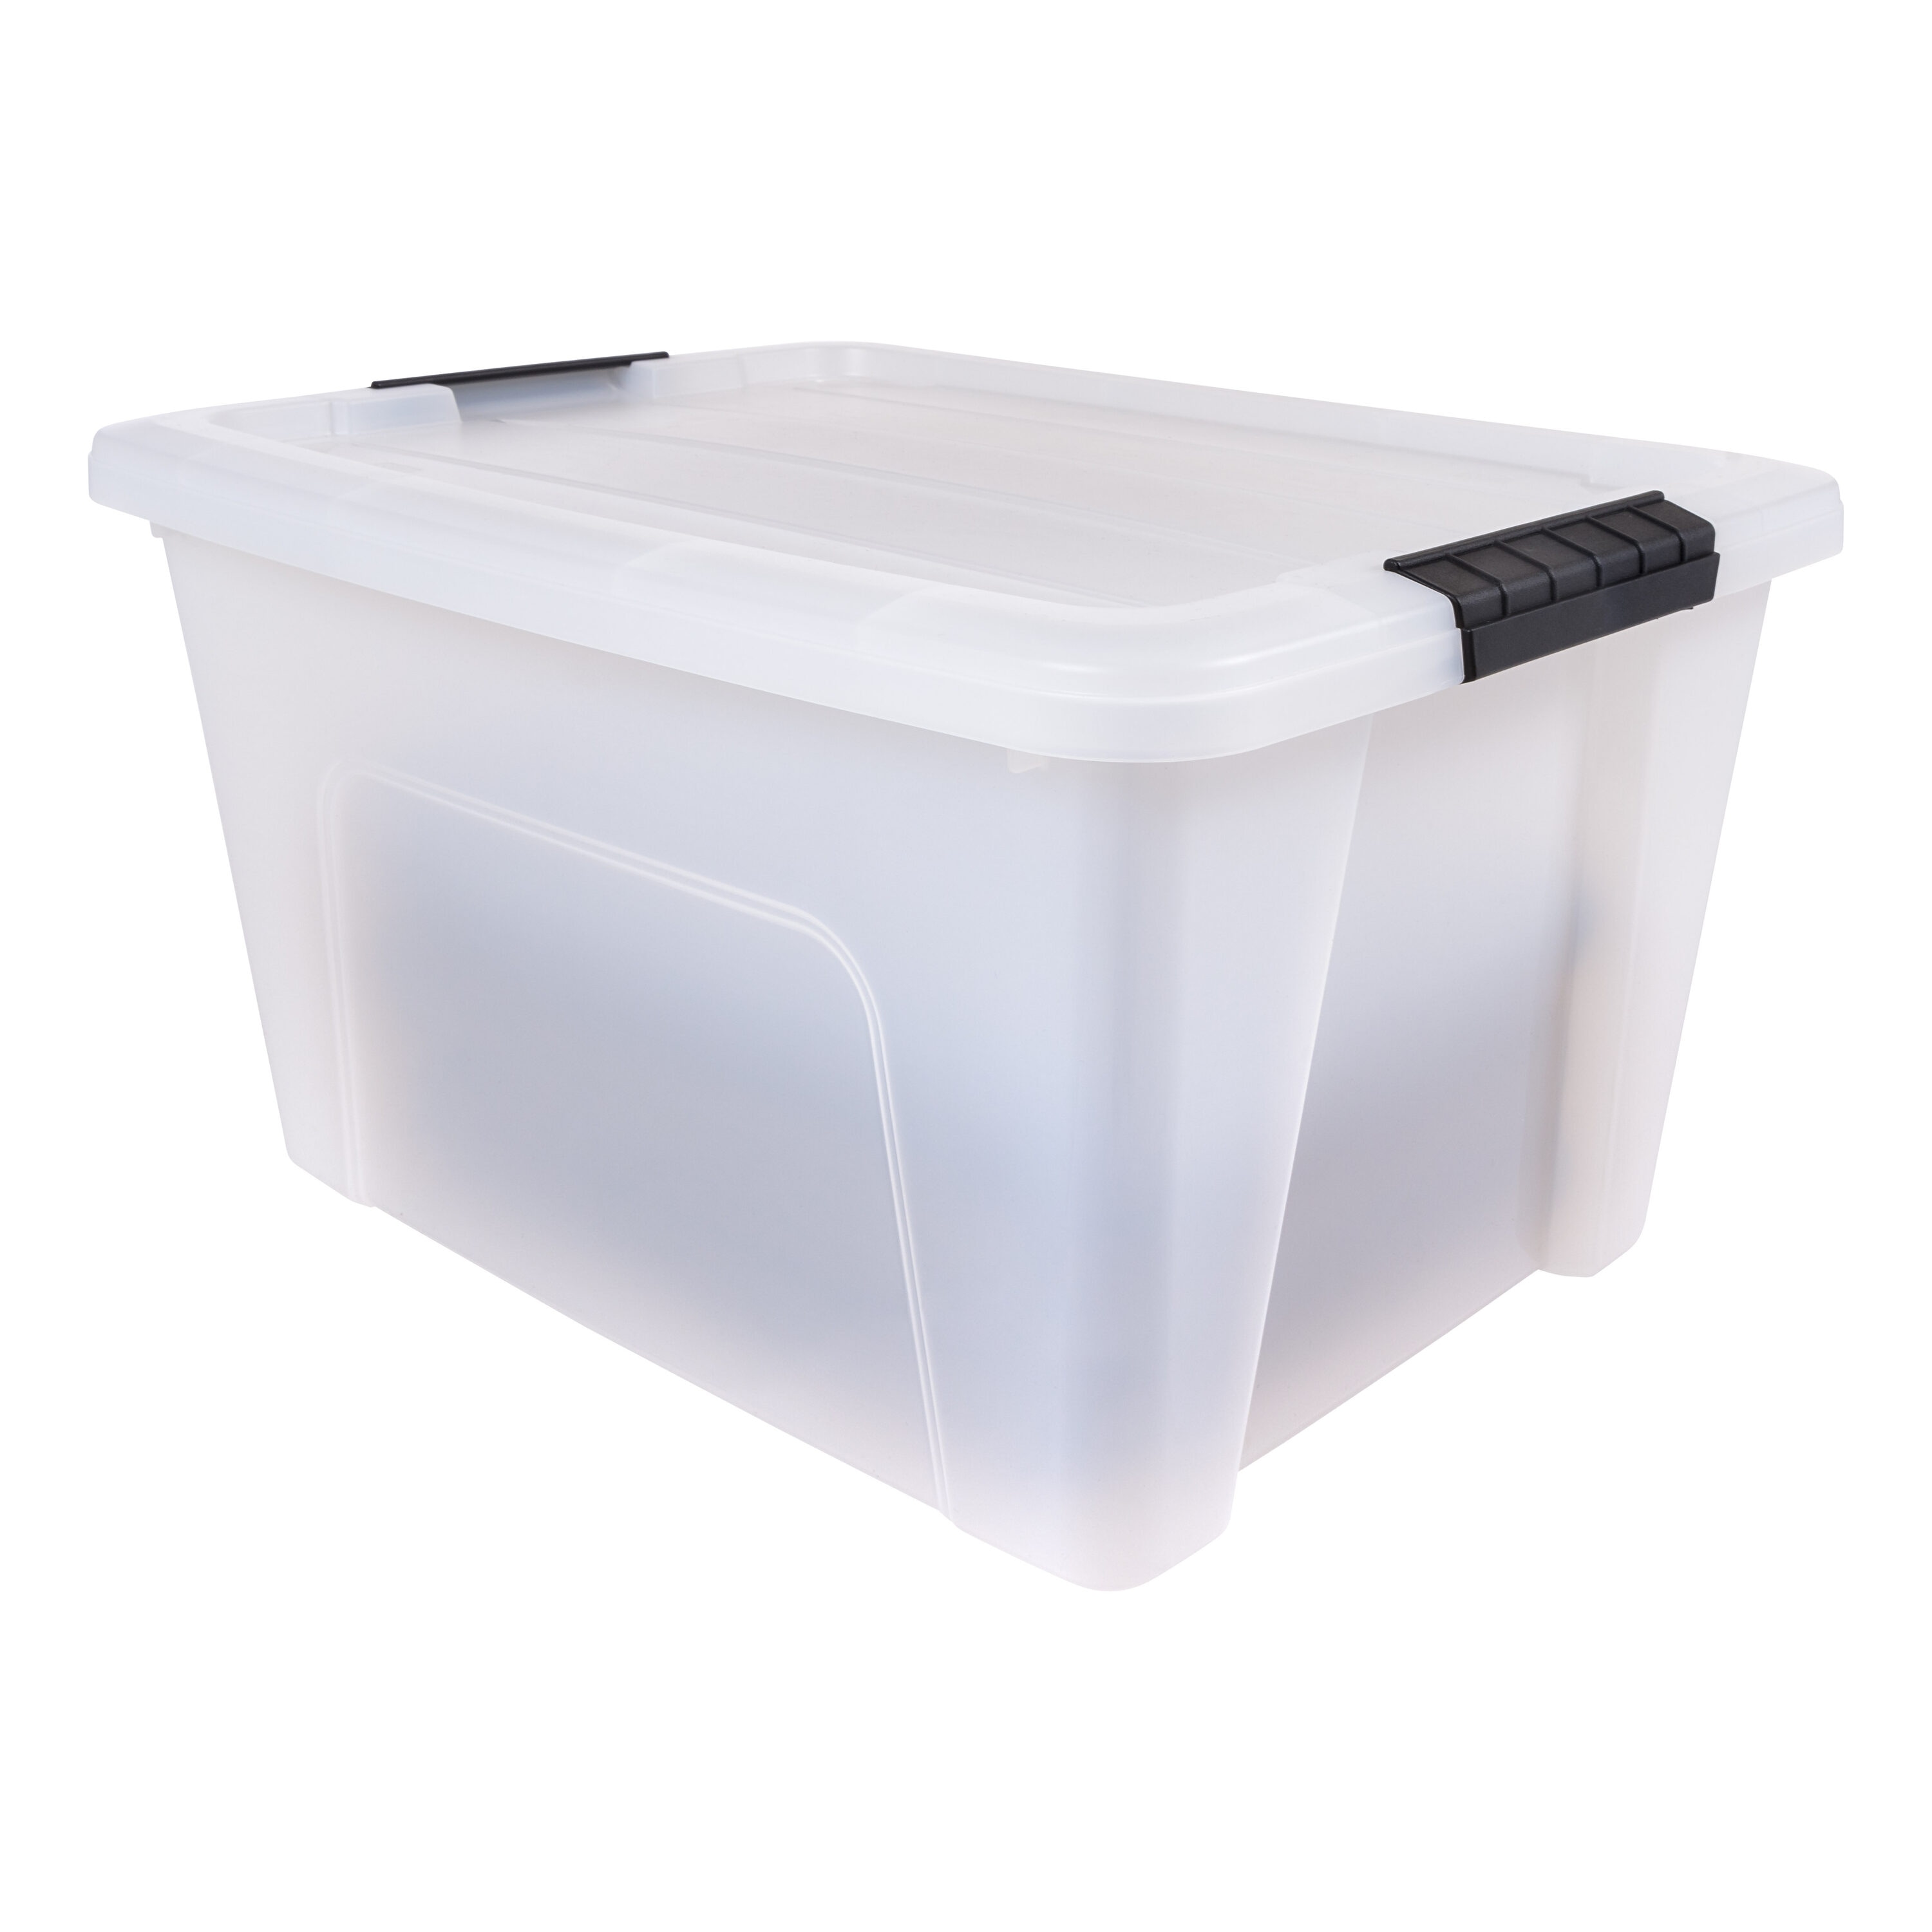 Storex 4 Gallon (15L) Classroom Storage Bin, Teal (Case of 6